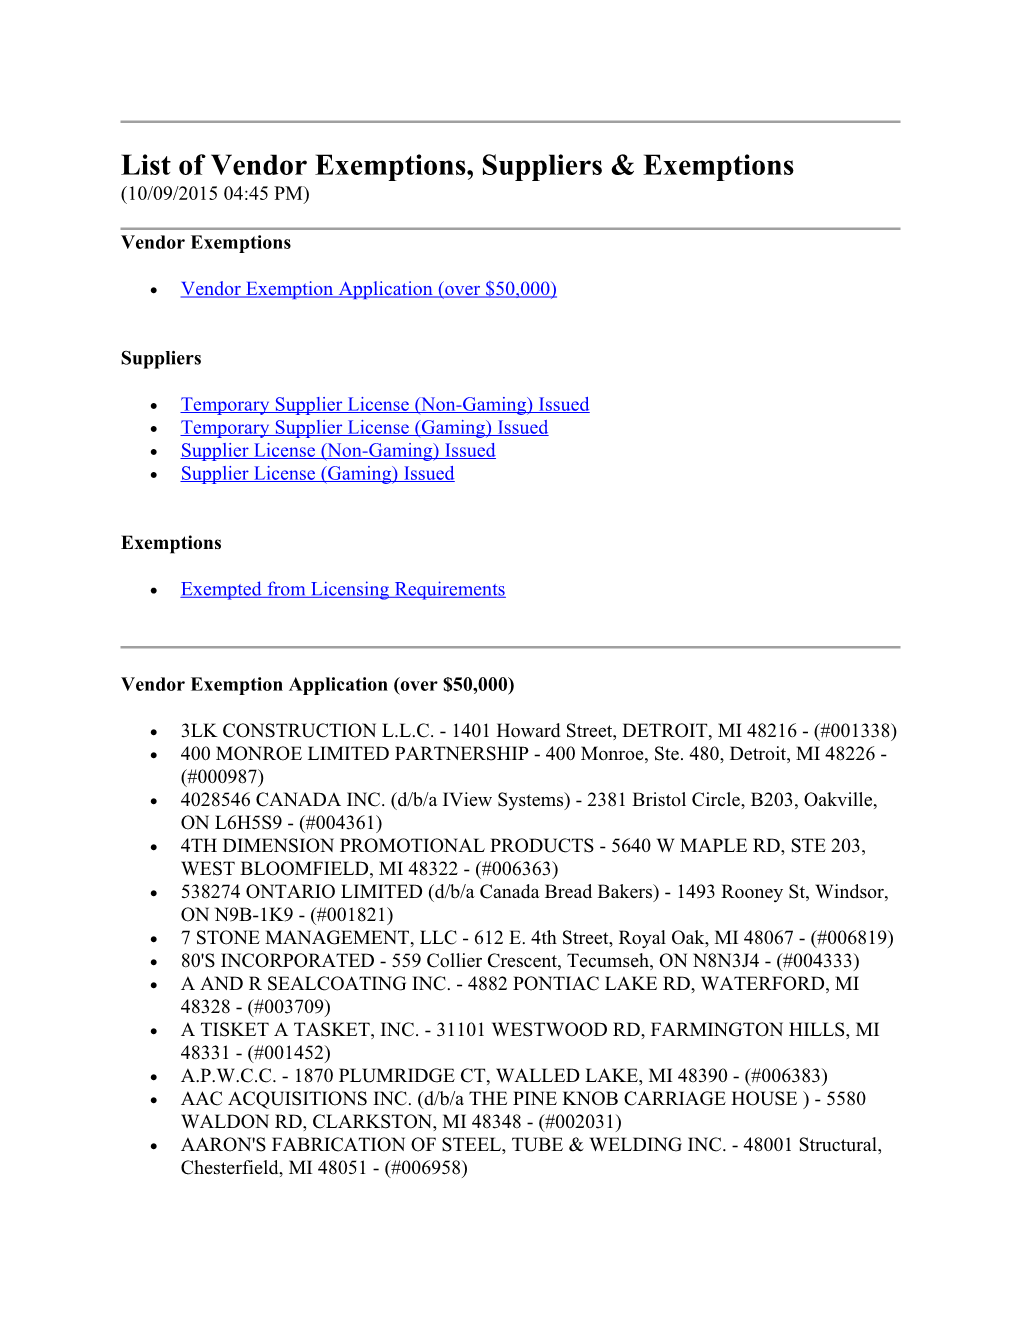 List of Vendor Exemptions, Suppliers & Exemptions (10/09/2015 04:45 PM)